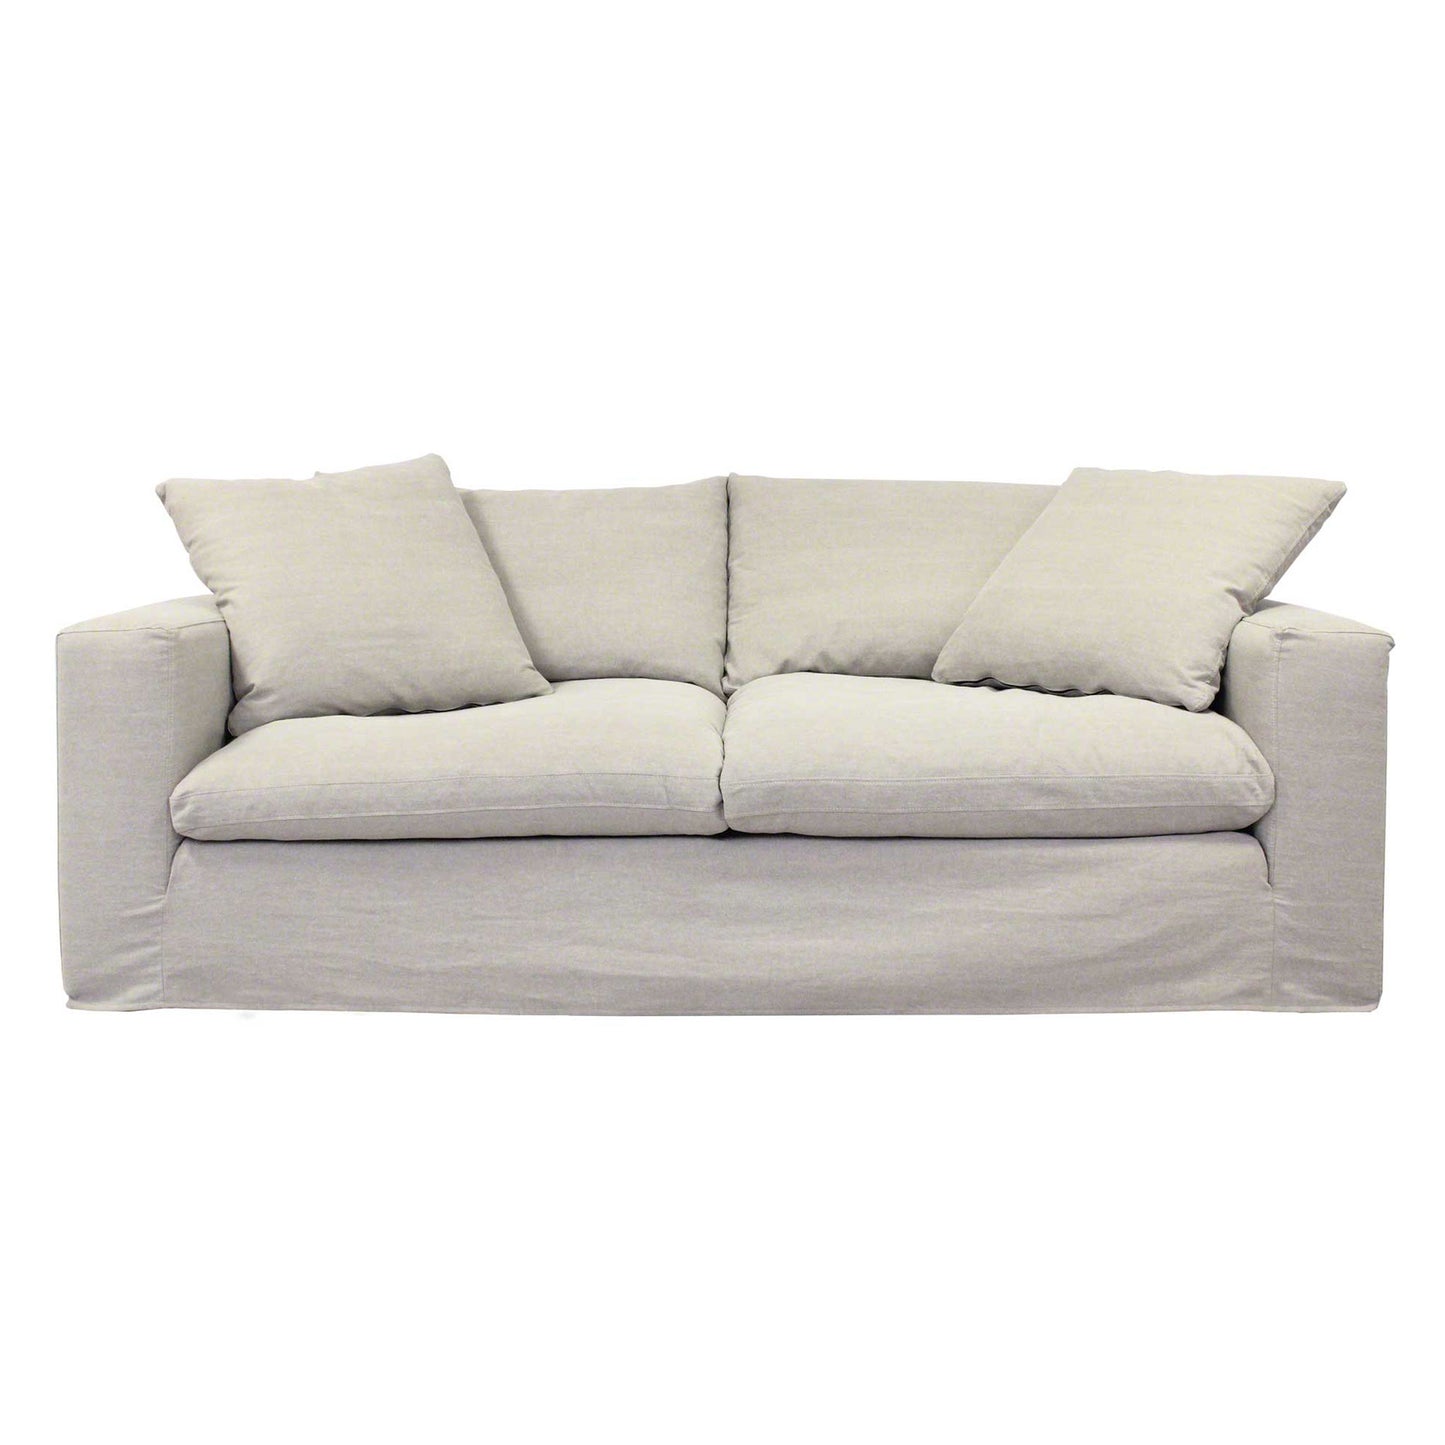 Stor och djup byggbar soffa i beige linnetyg